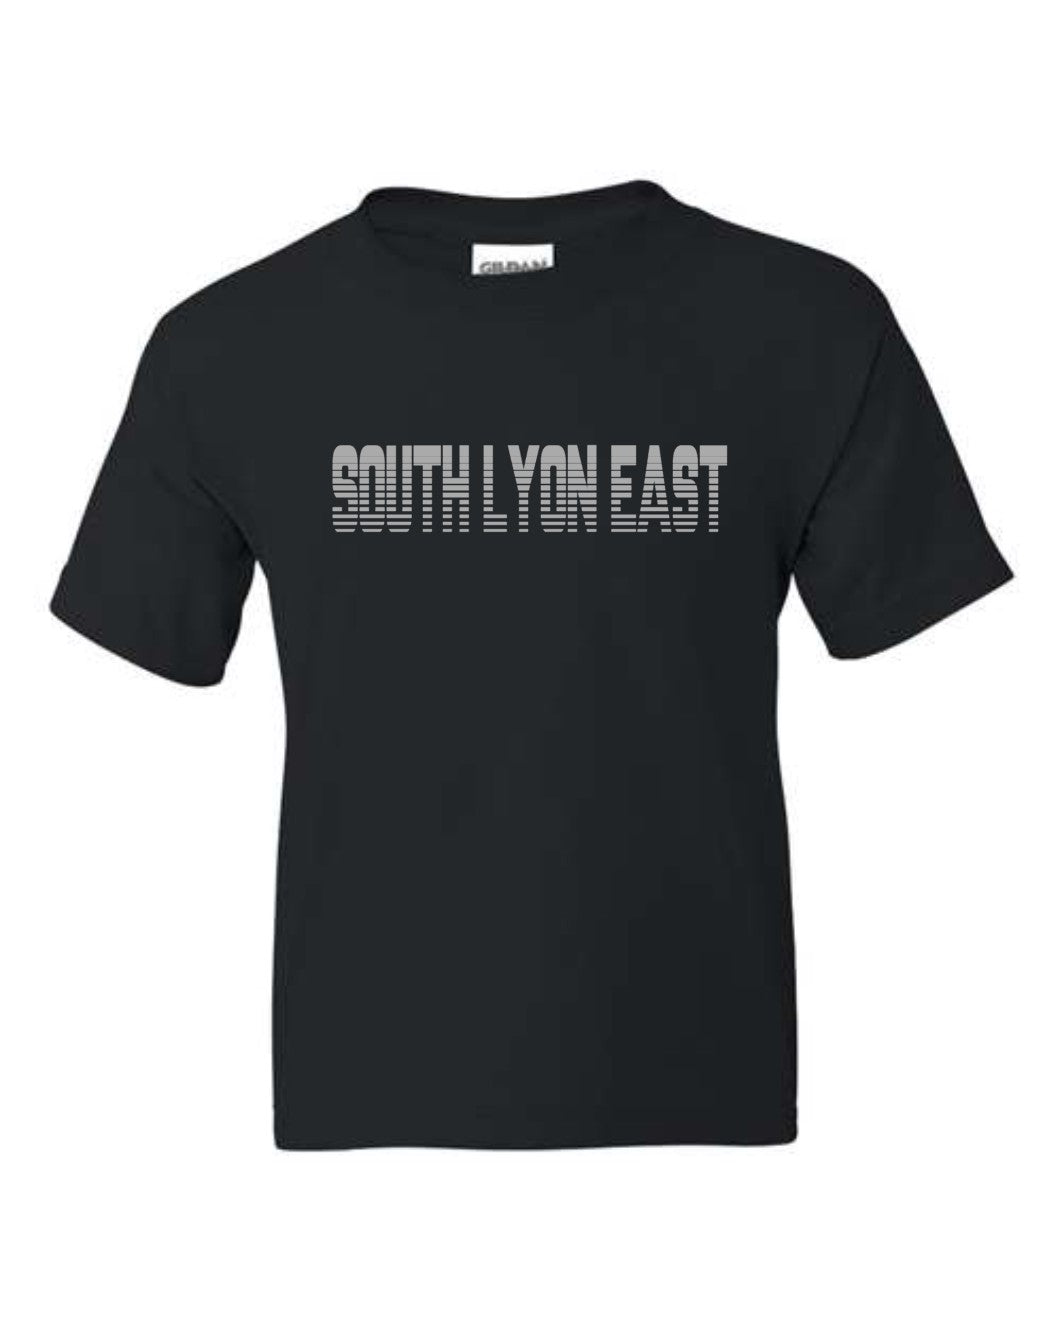 South Lyon East Showdown Tee